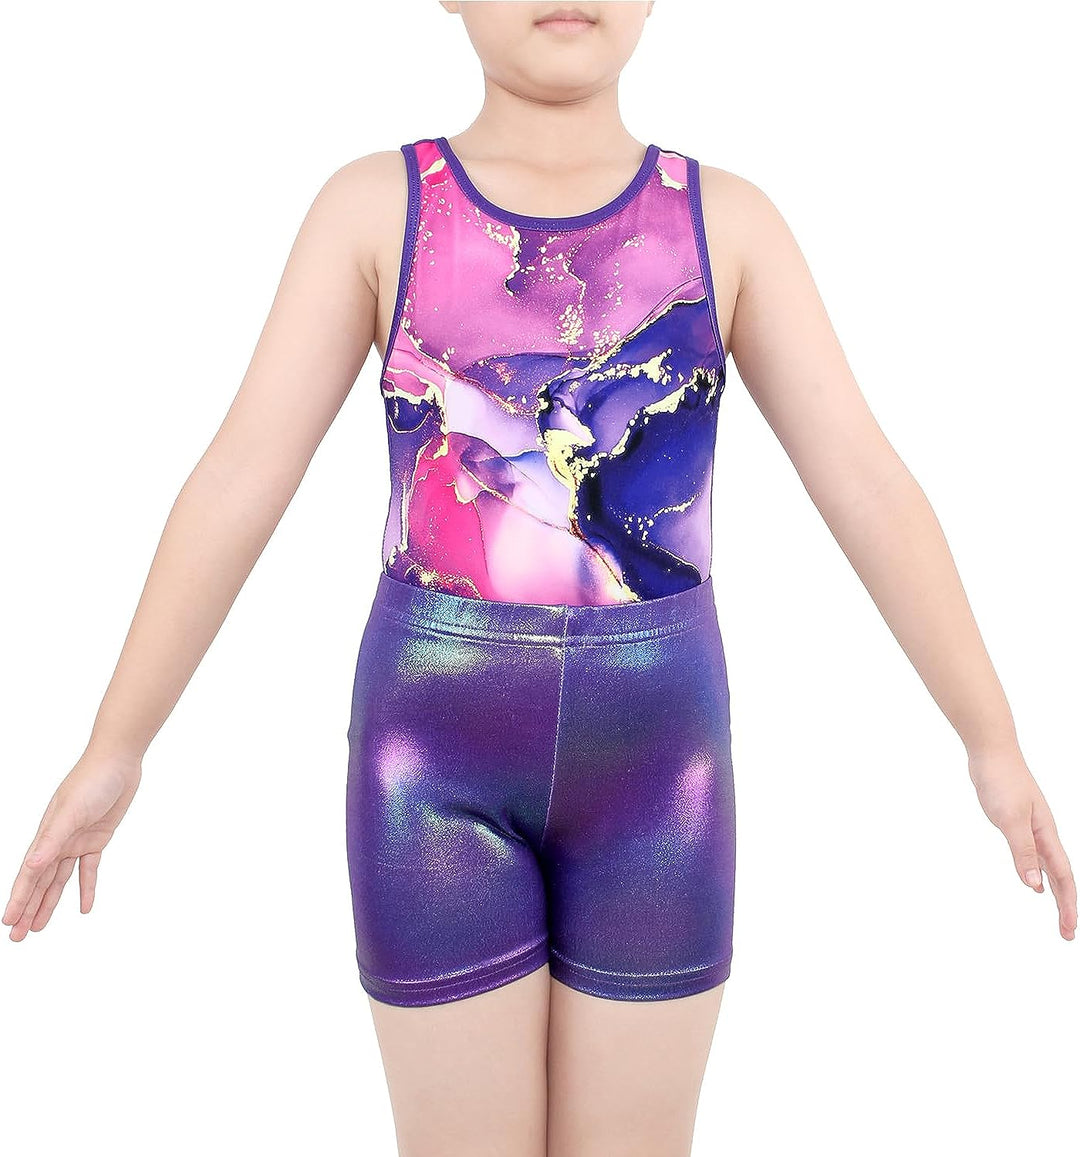 Girls Purple Marbling Cross Back Gymnastics Leotards Outfit - JOYSTREAM